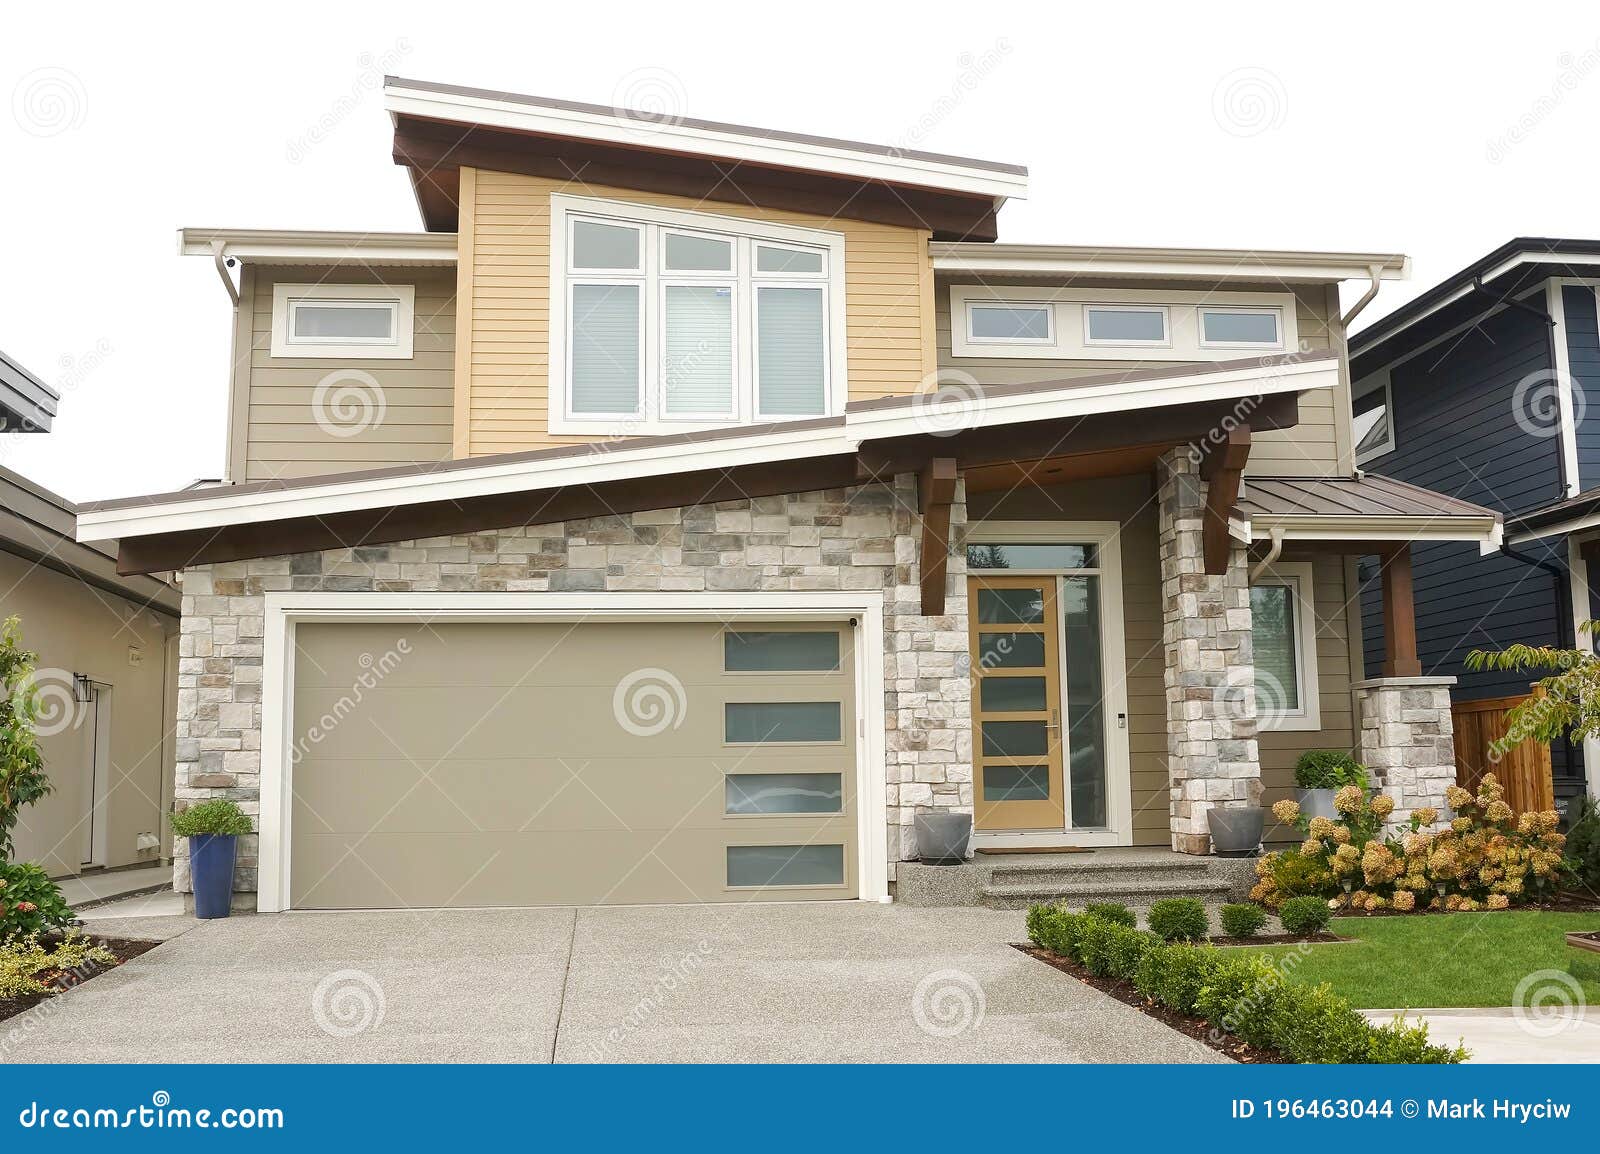 house home tan beige white exterior elevation roof peak details